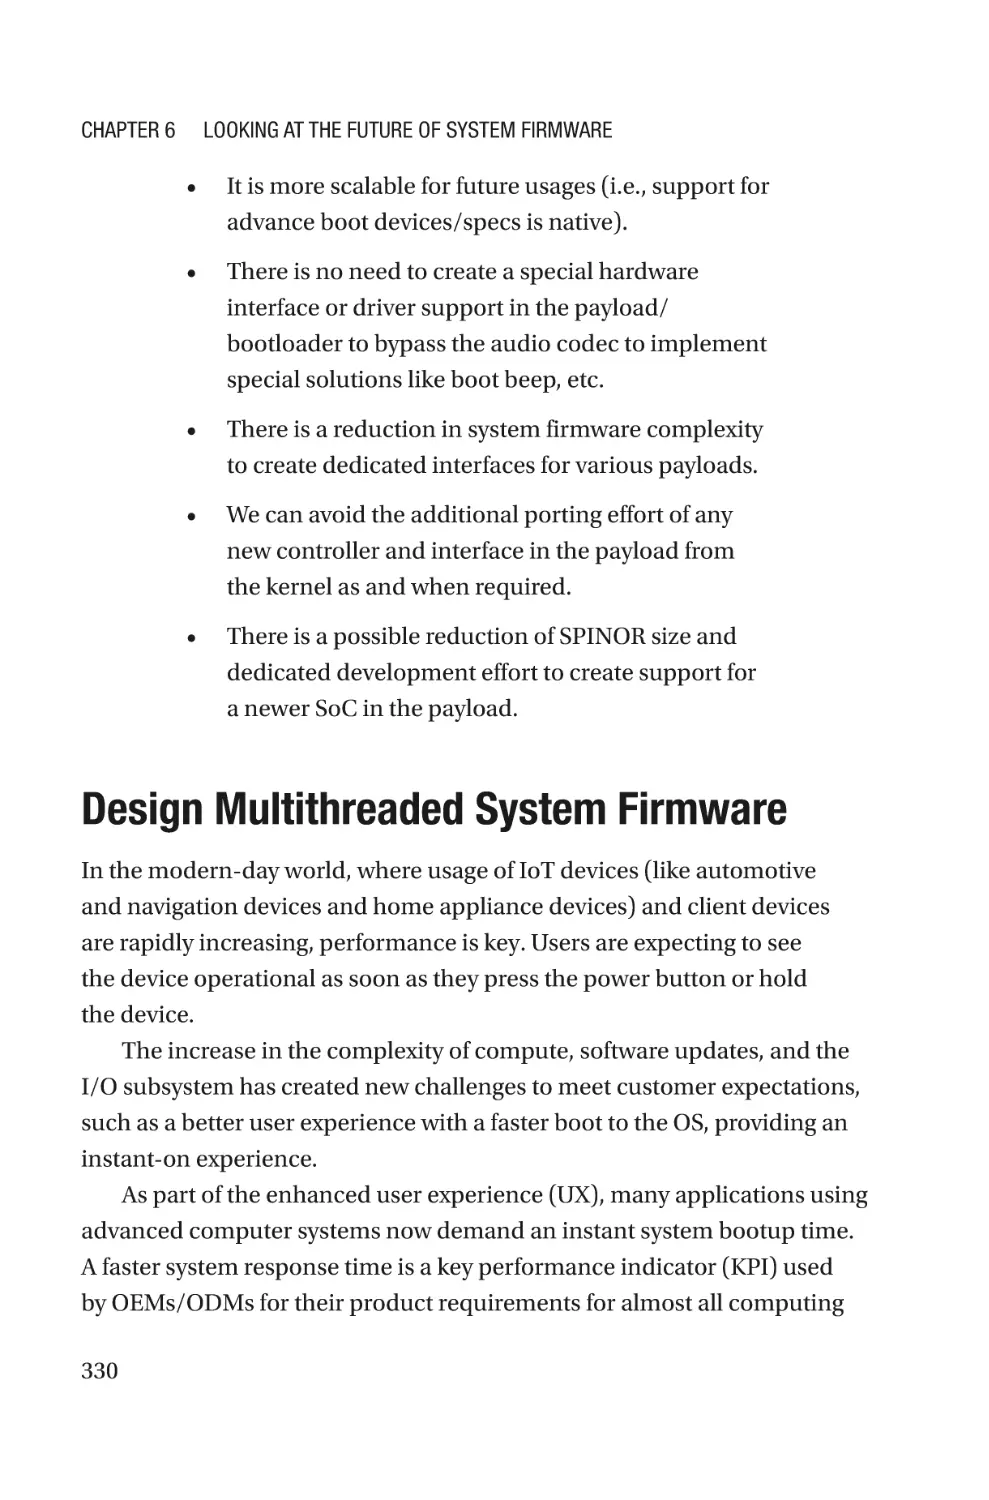 Design Multithreaded System Firmware